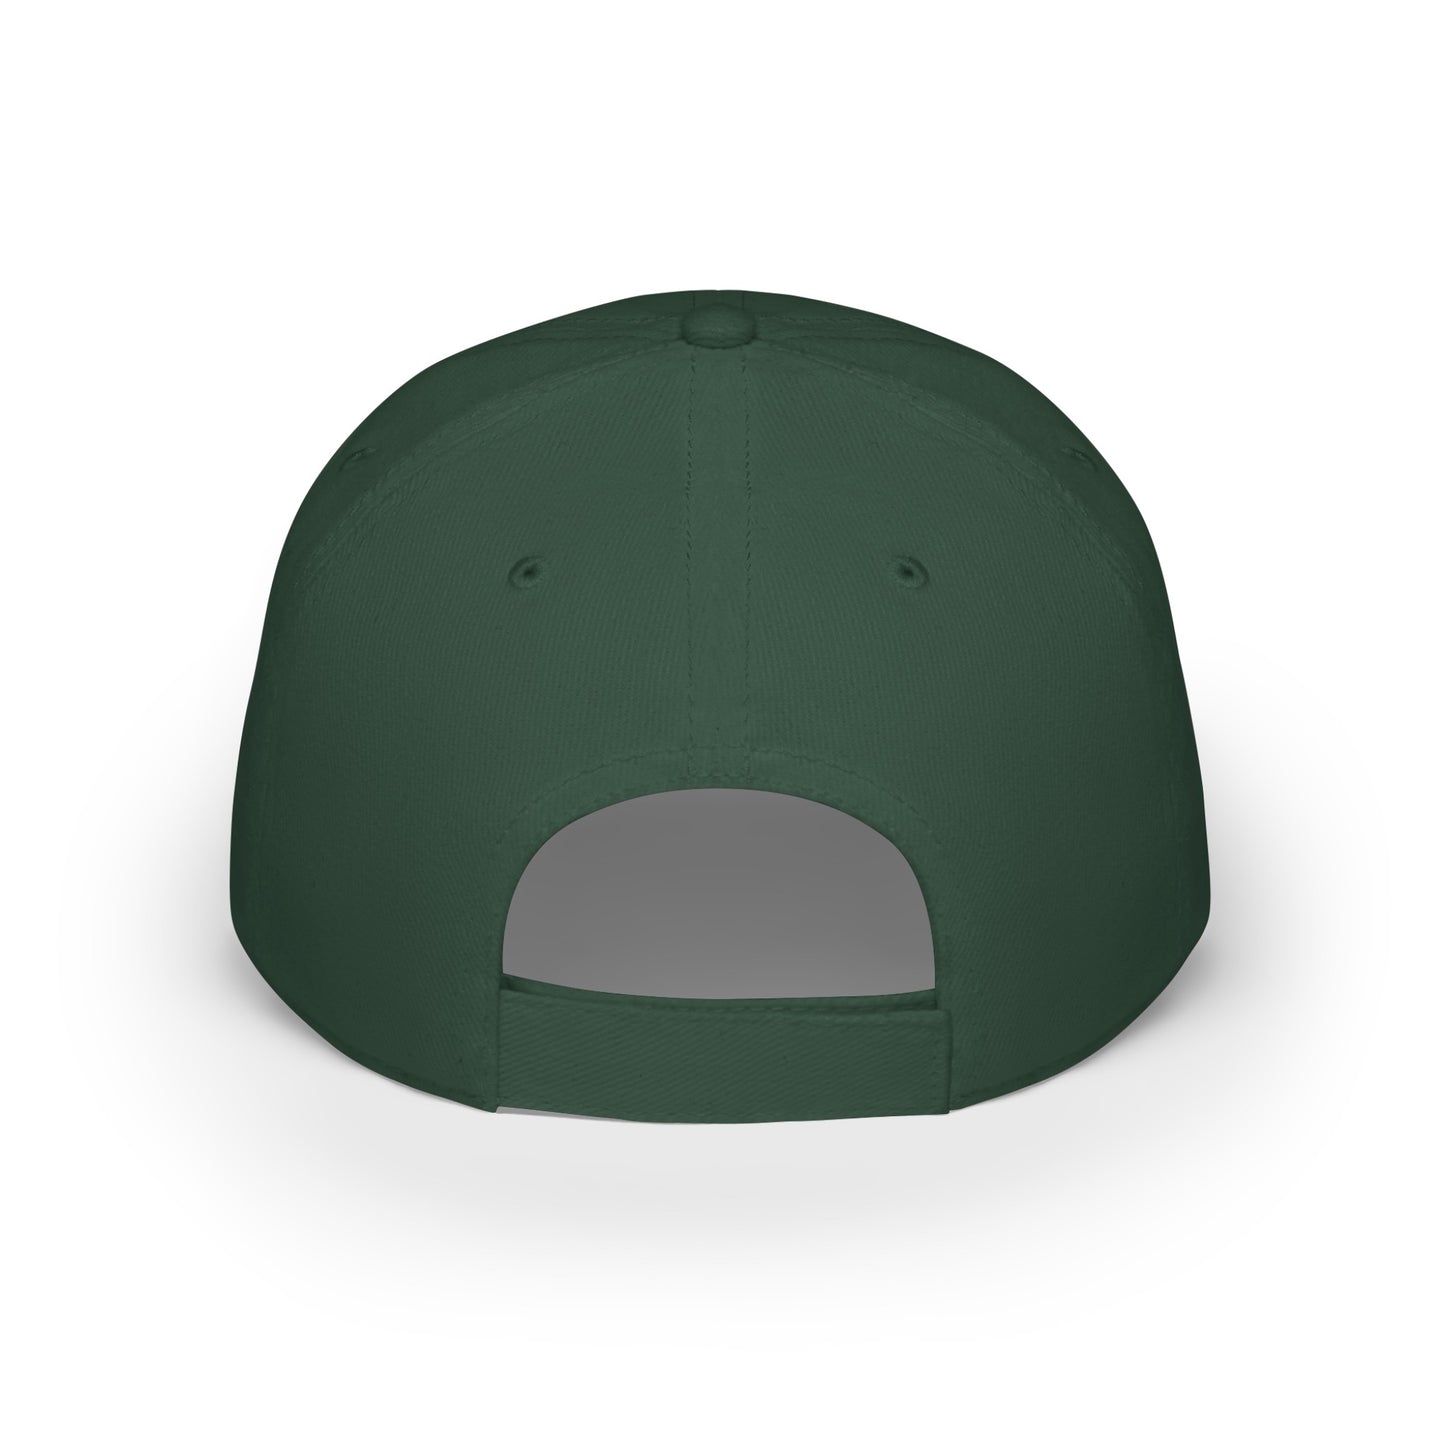 MDBTDJ#SBBLUC - Low Profile Baseball Cap